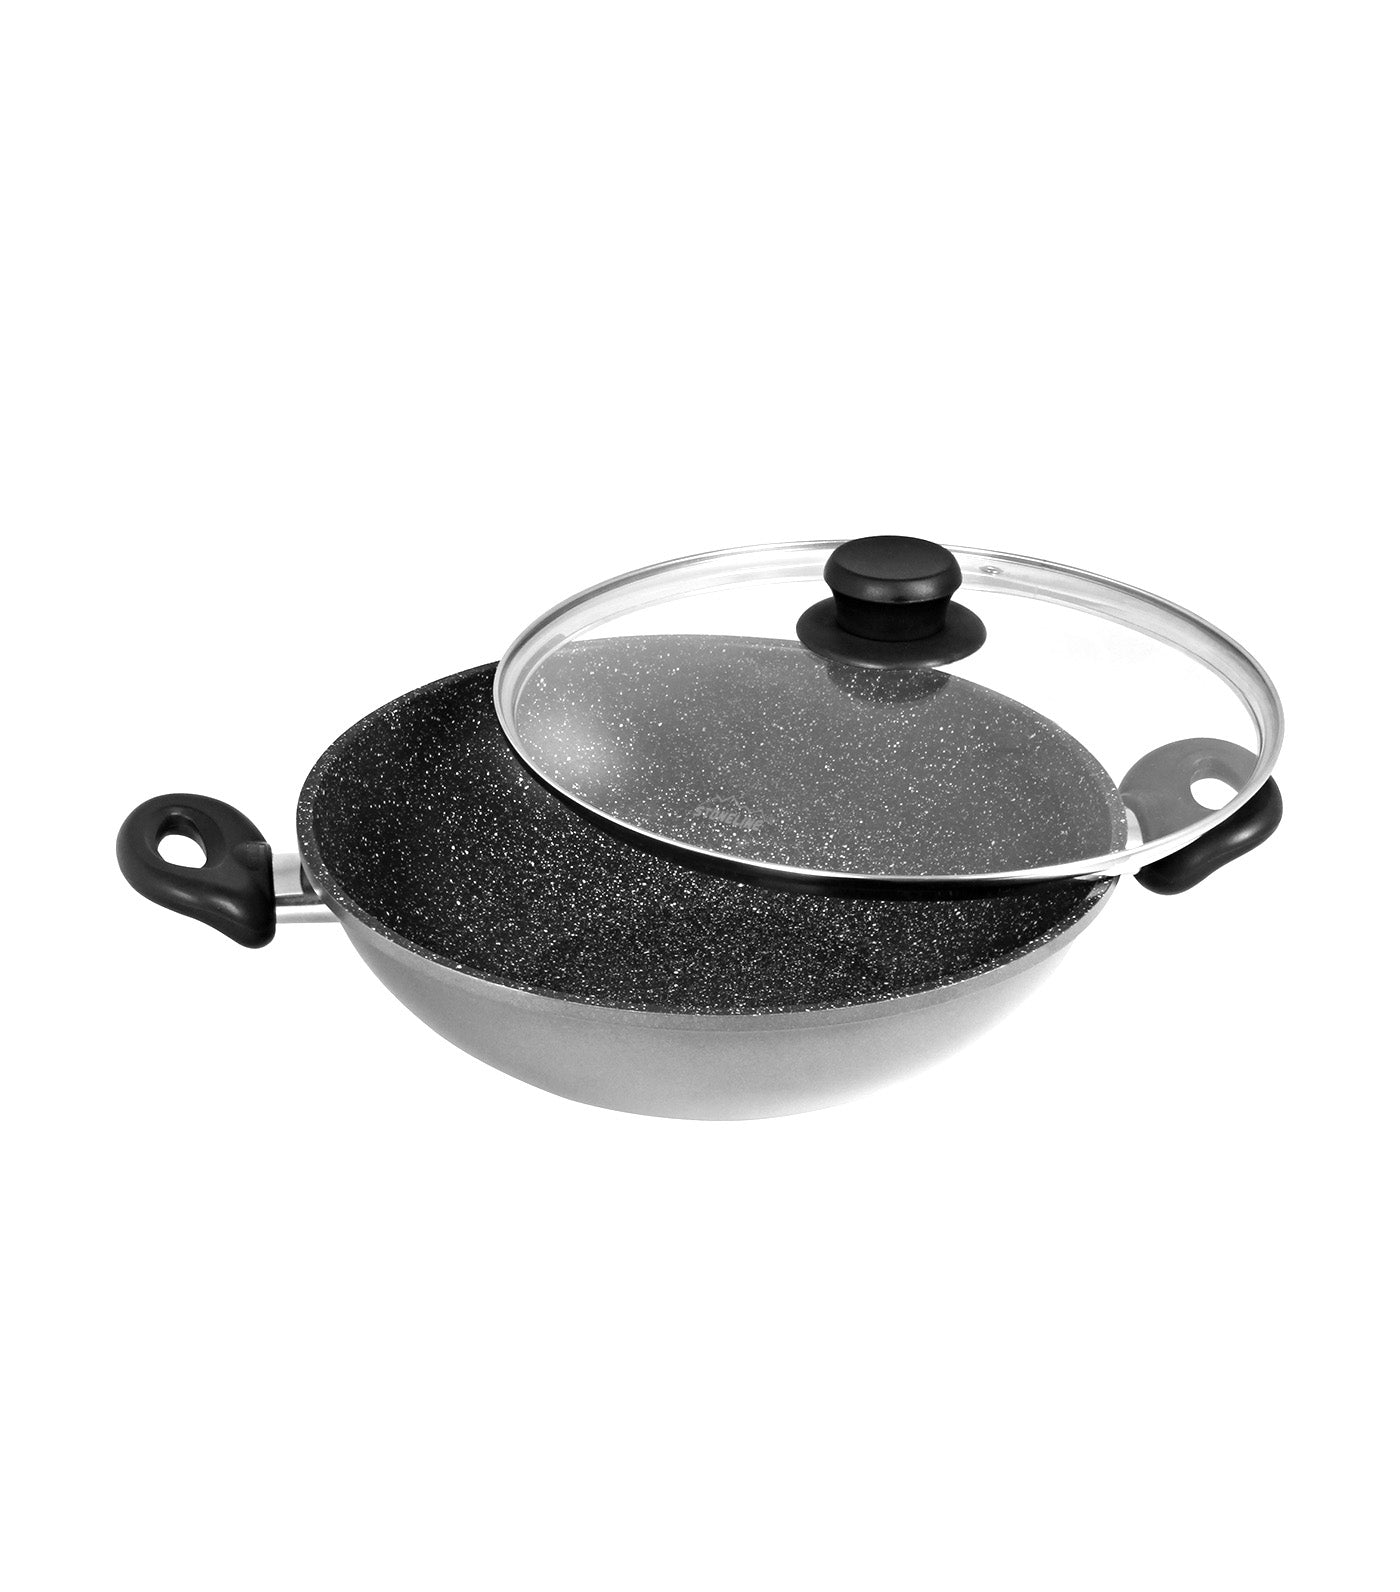 stoneline wok with glass lid